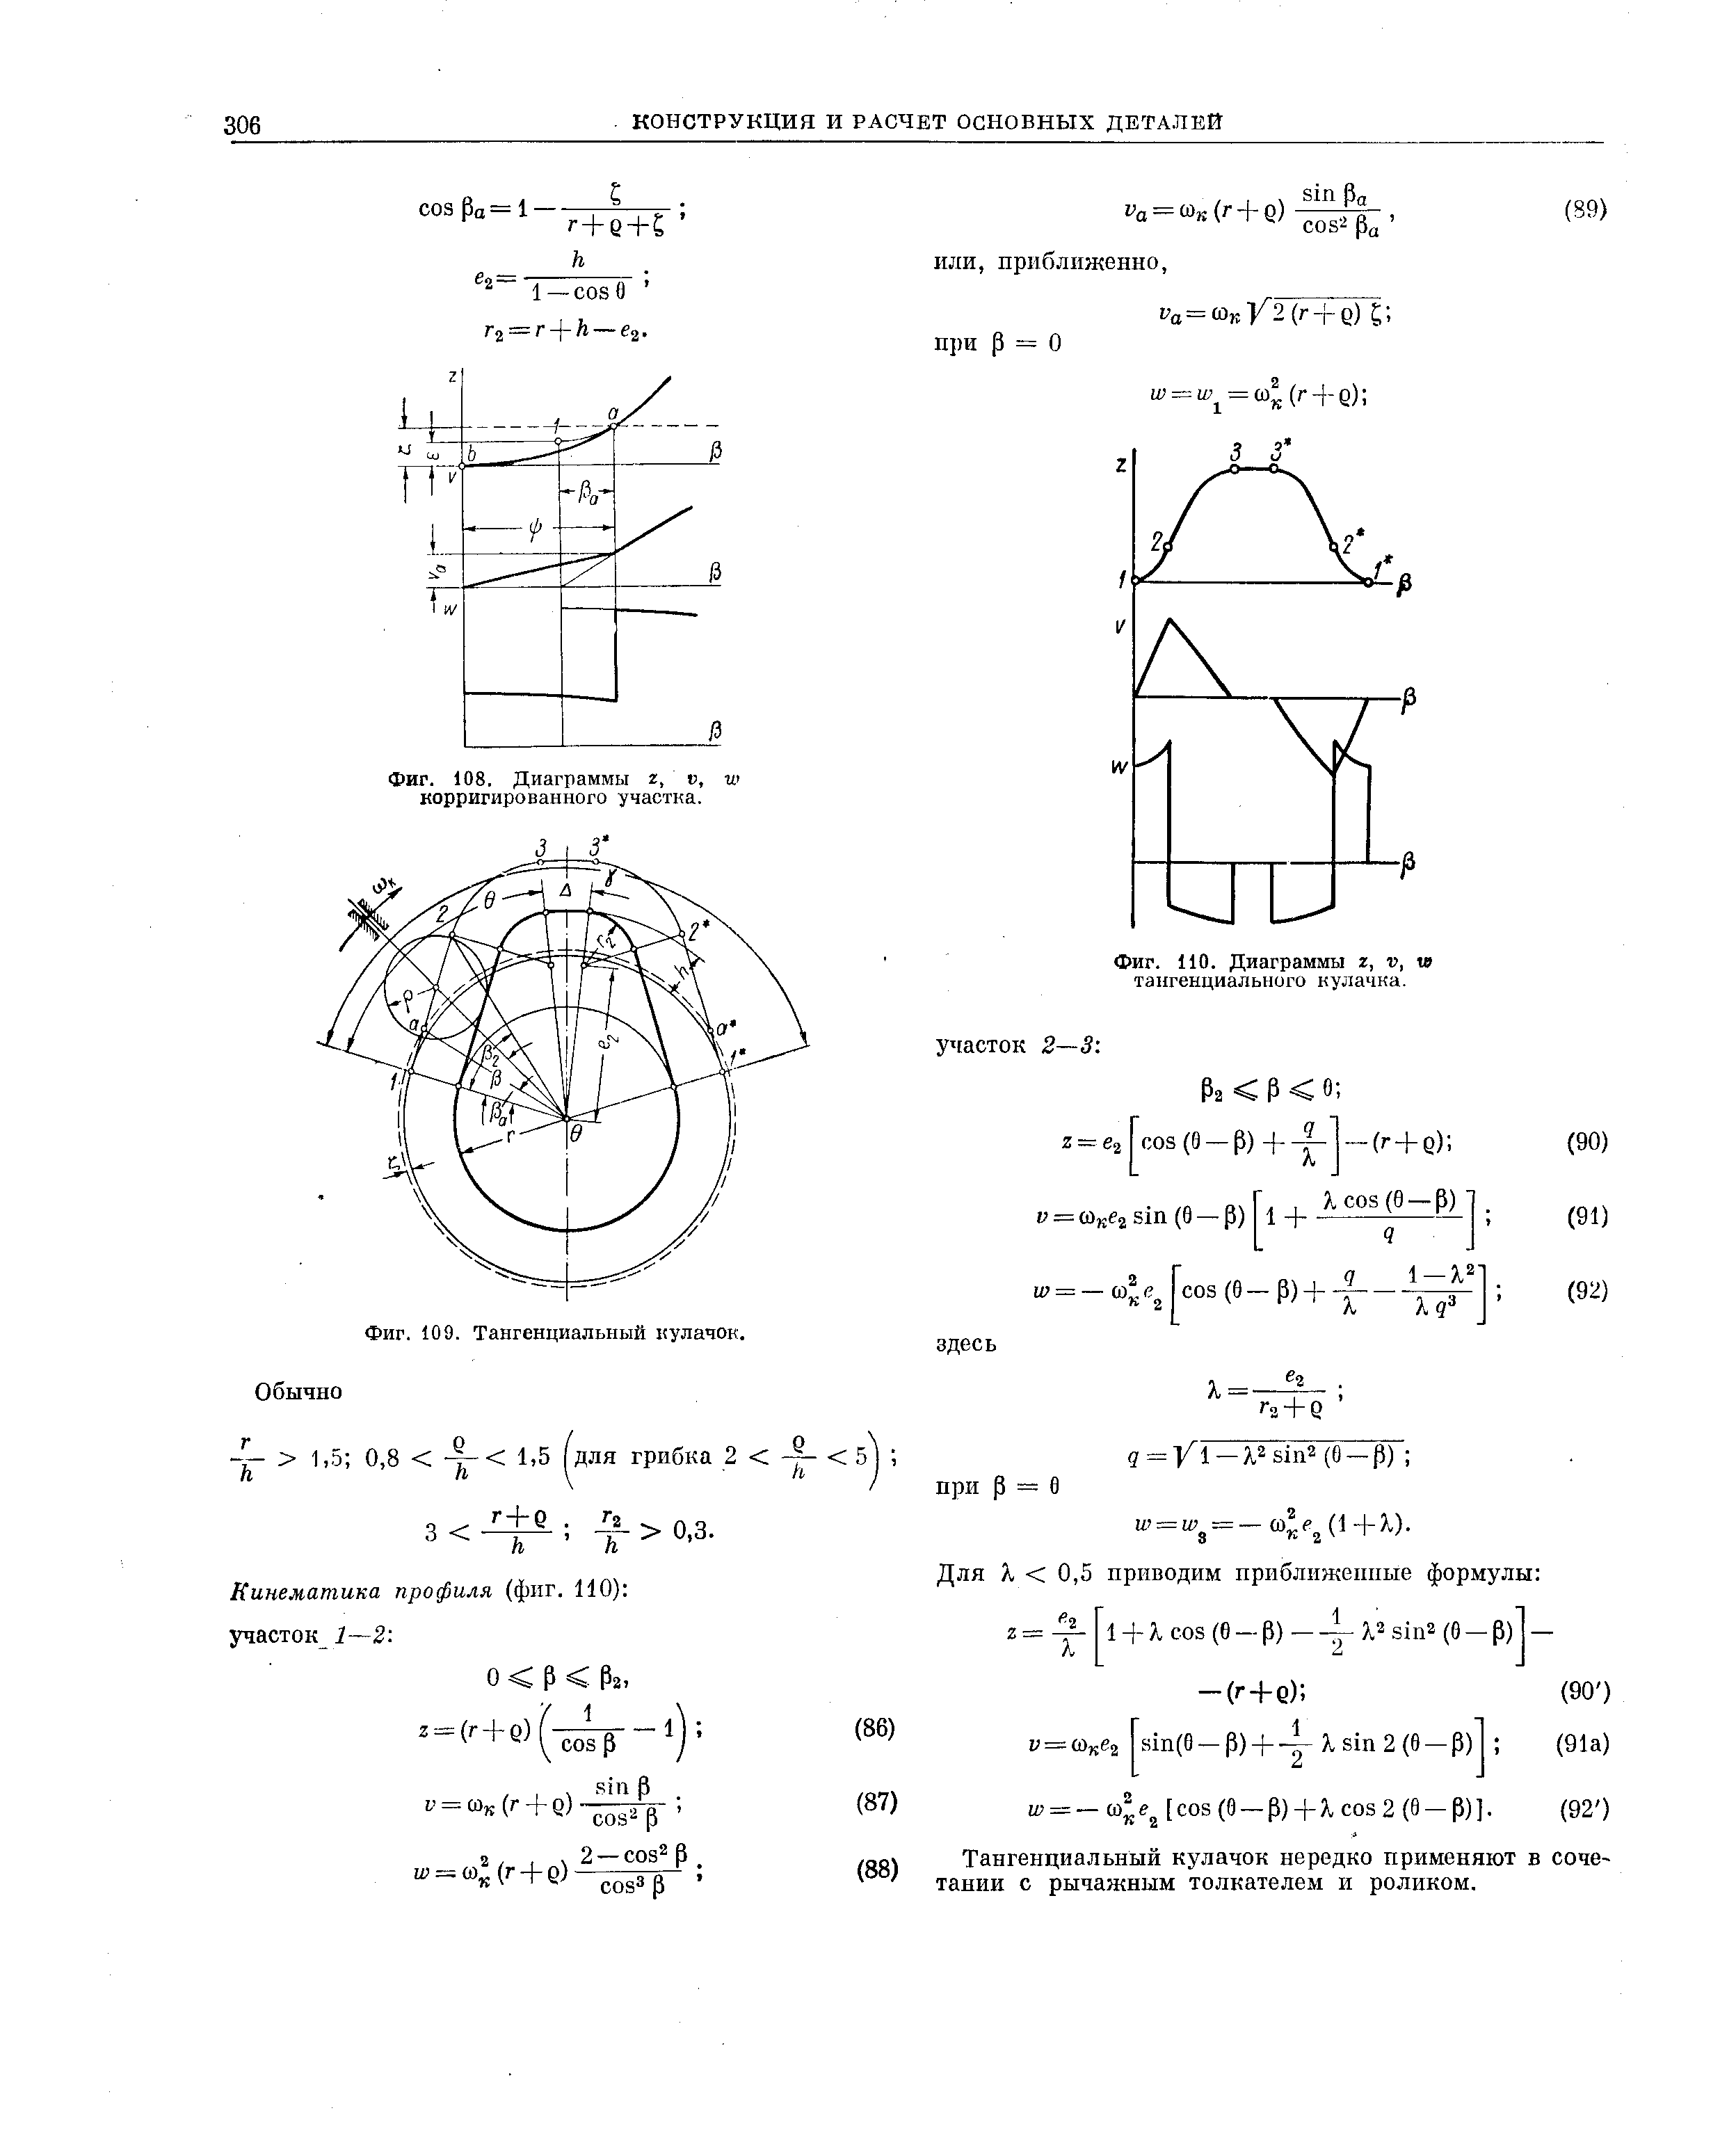 Фиг. 110. Диаграммы z, v, vo тангенциального кулачка.
